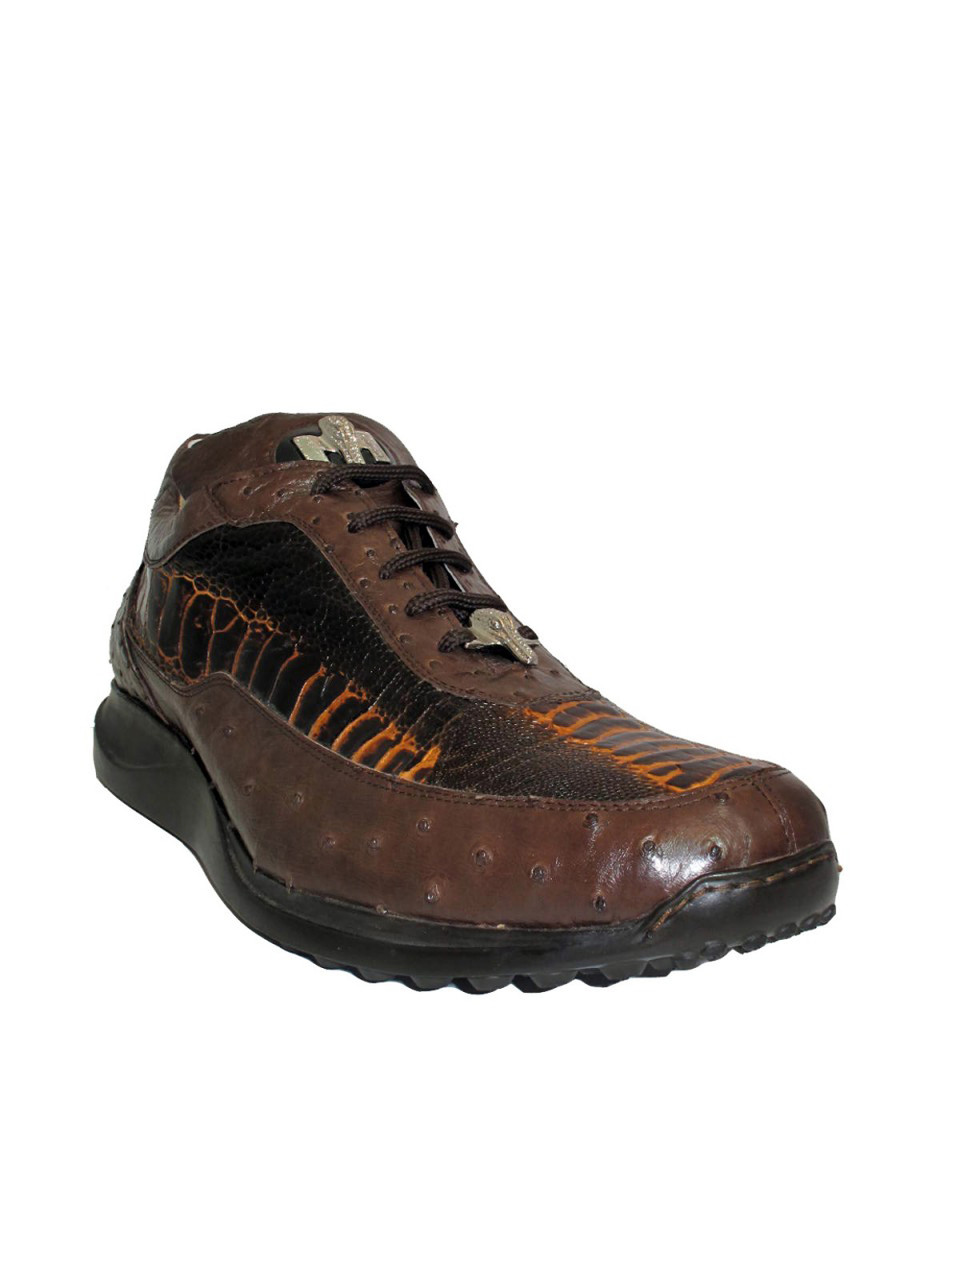 Men's Mauri shoe sneakers Ostrich leg/Ostrich belly/ croco 8900